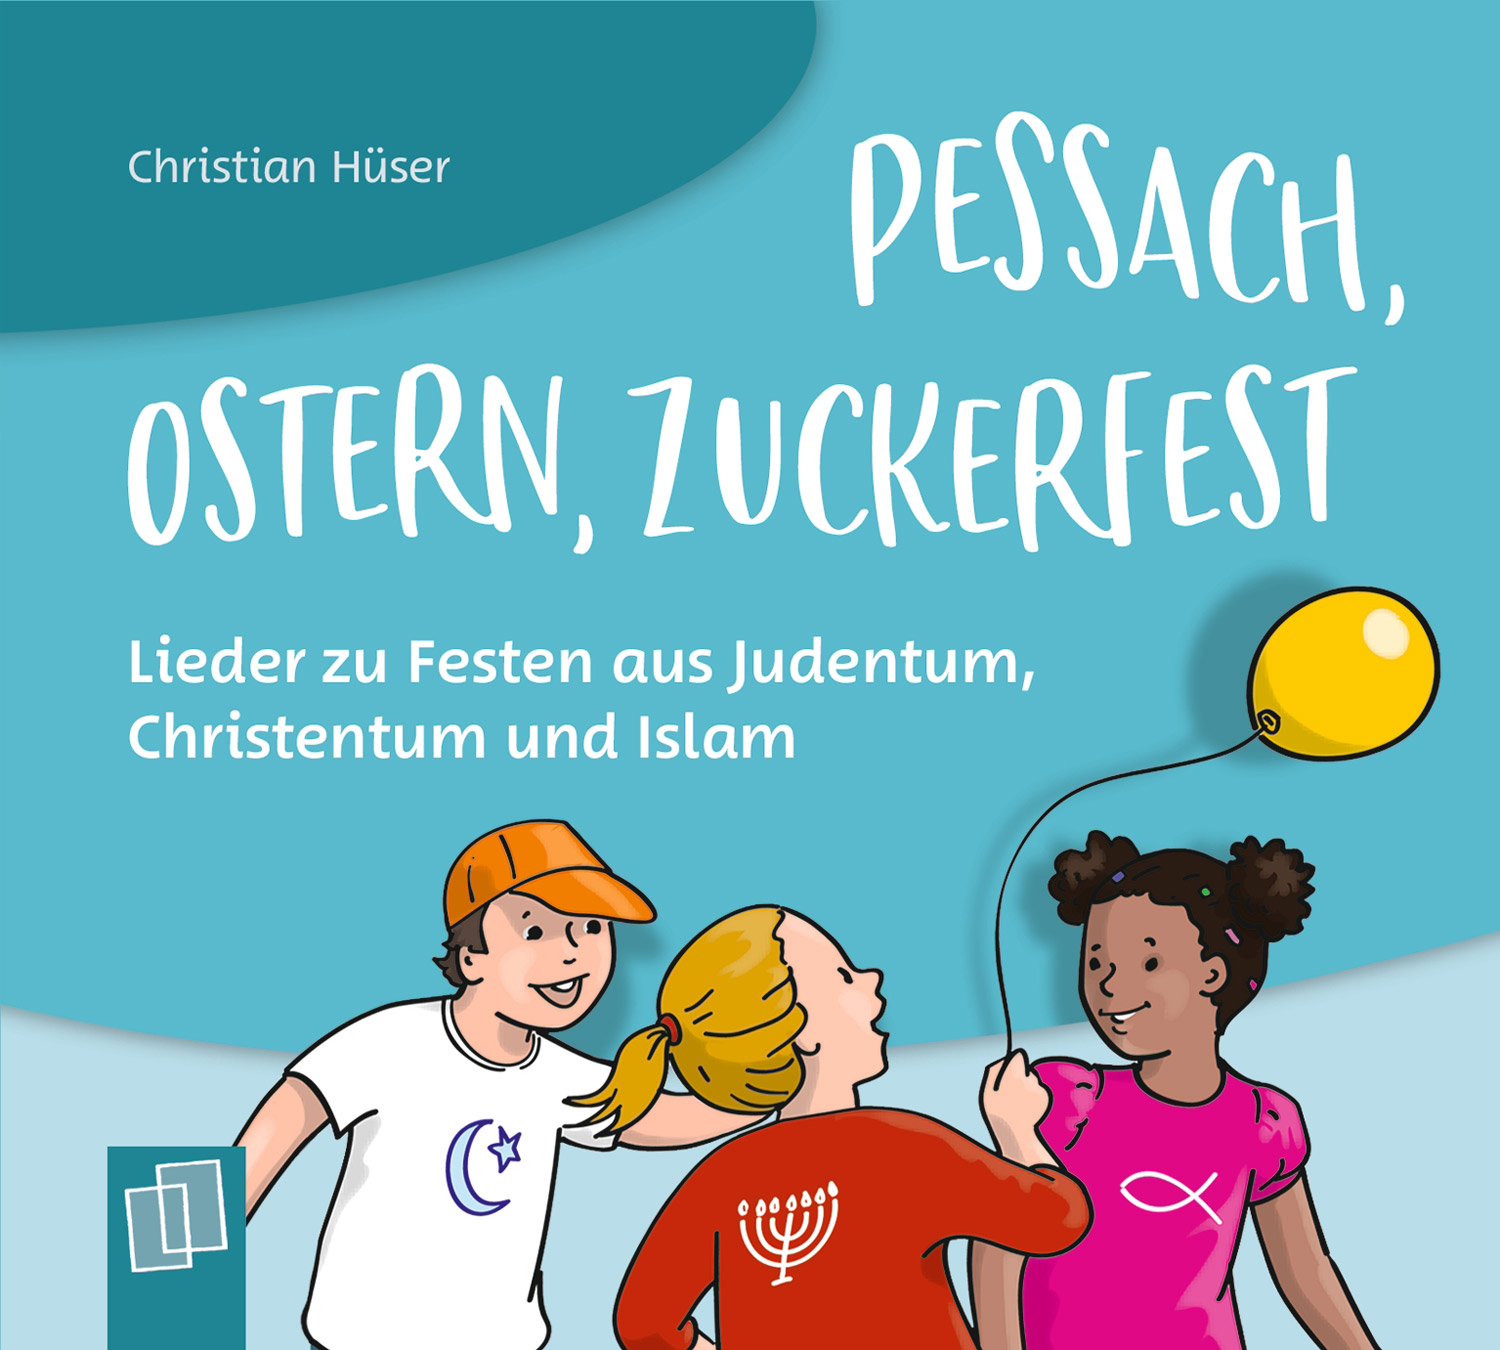 CD: Pessach, Ostern, Zuckerfest